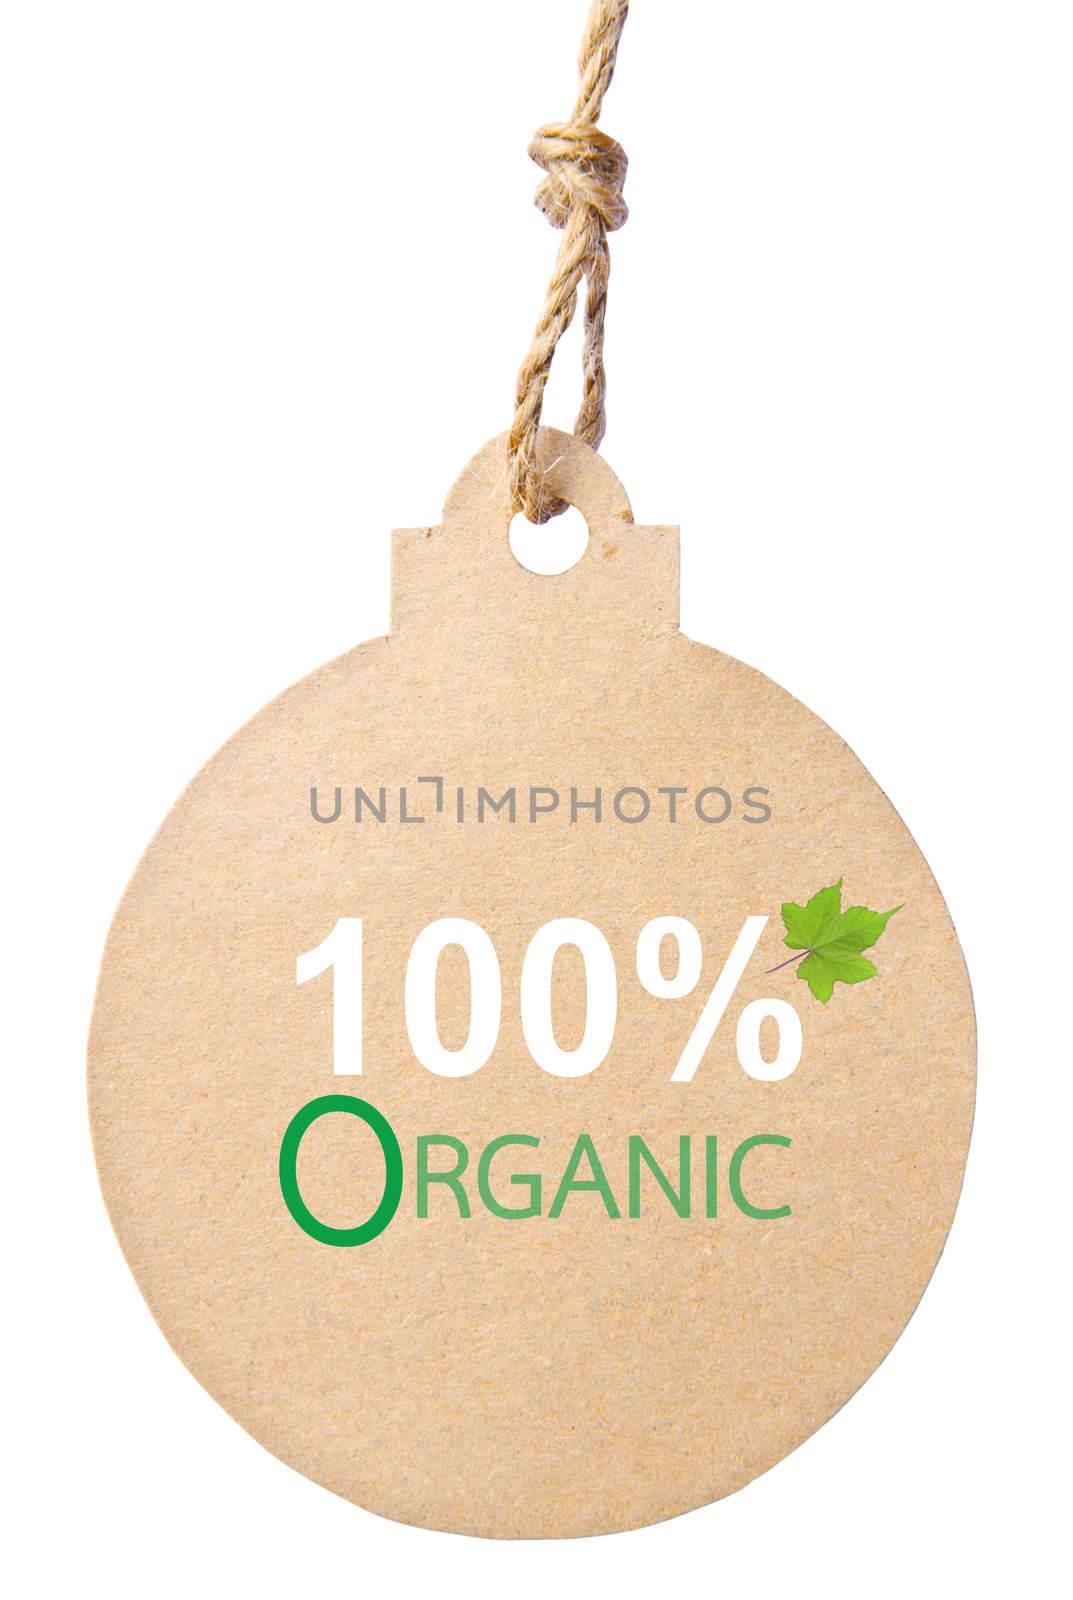 Eco friendly tag, 100% organic. Clipping path